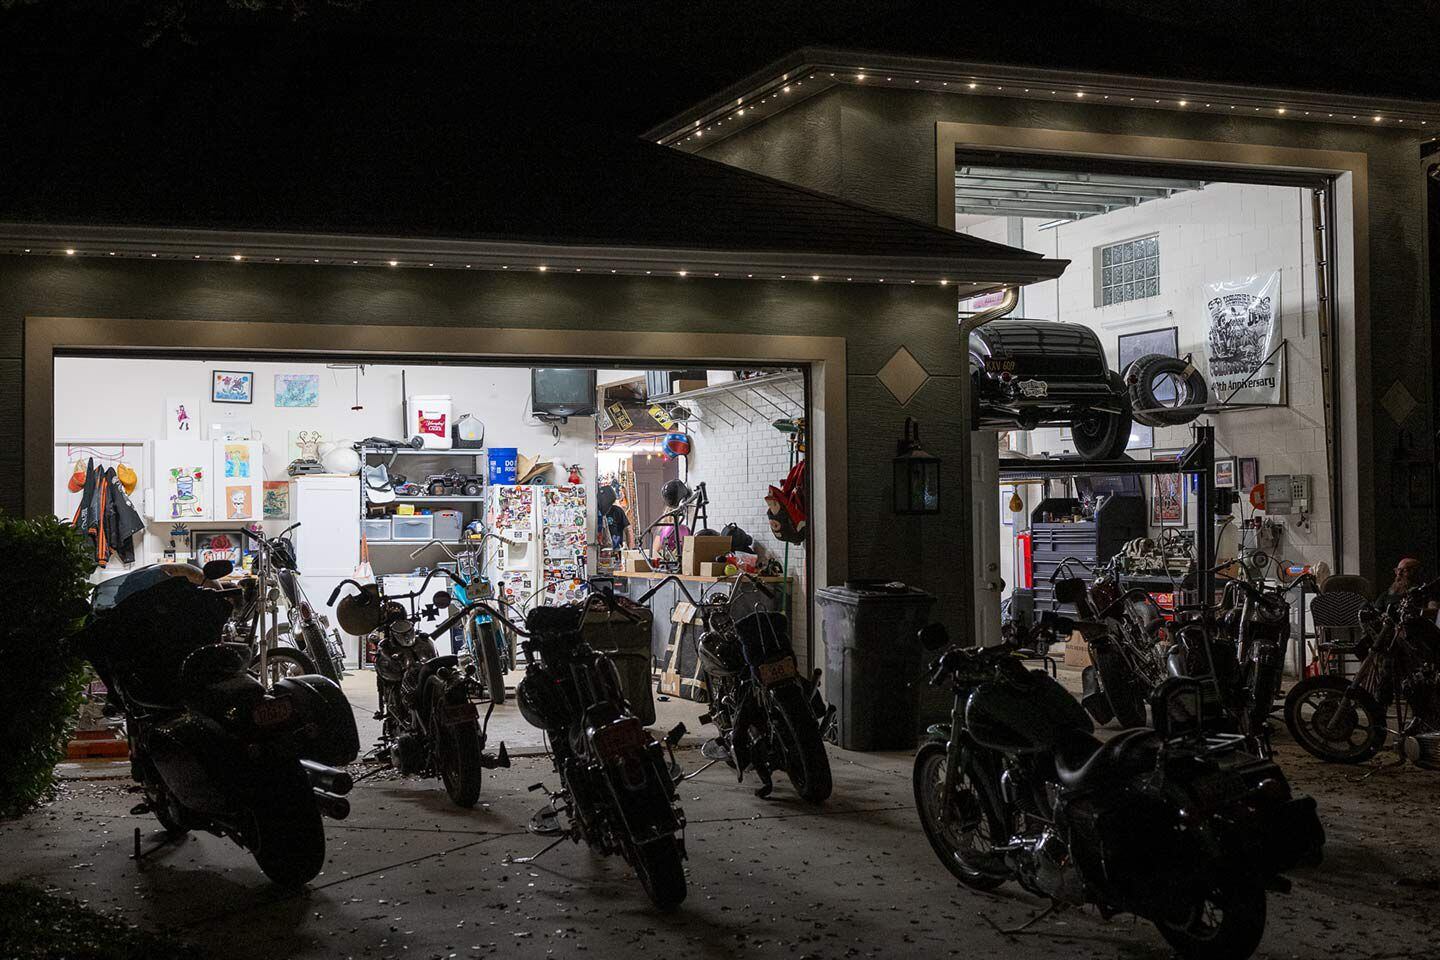 Shop nights rule. The scene at JoJo (of Giuseppe’s Steel City Pizza) Mialki’s house during Daytona Bike Week.